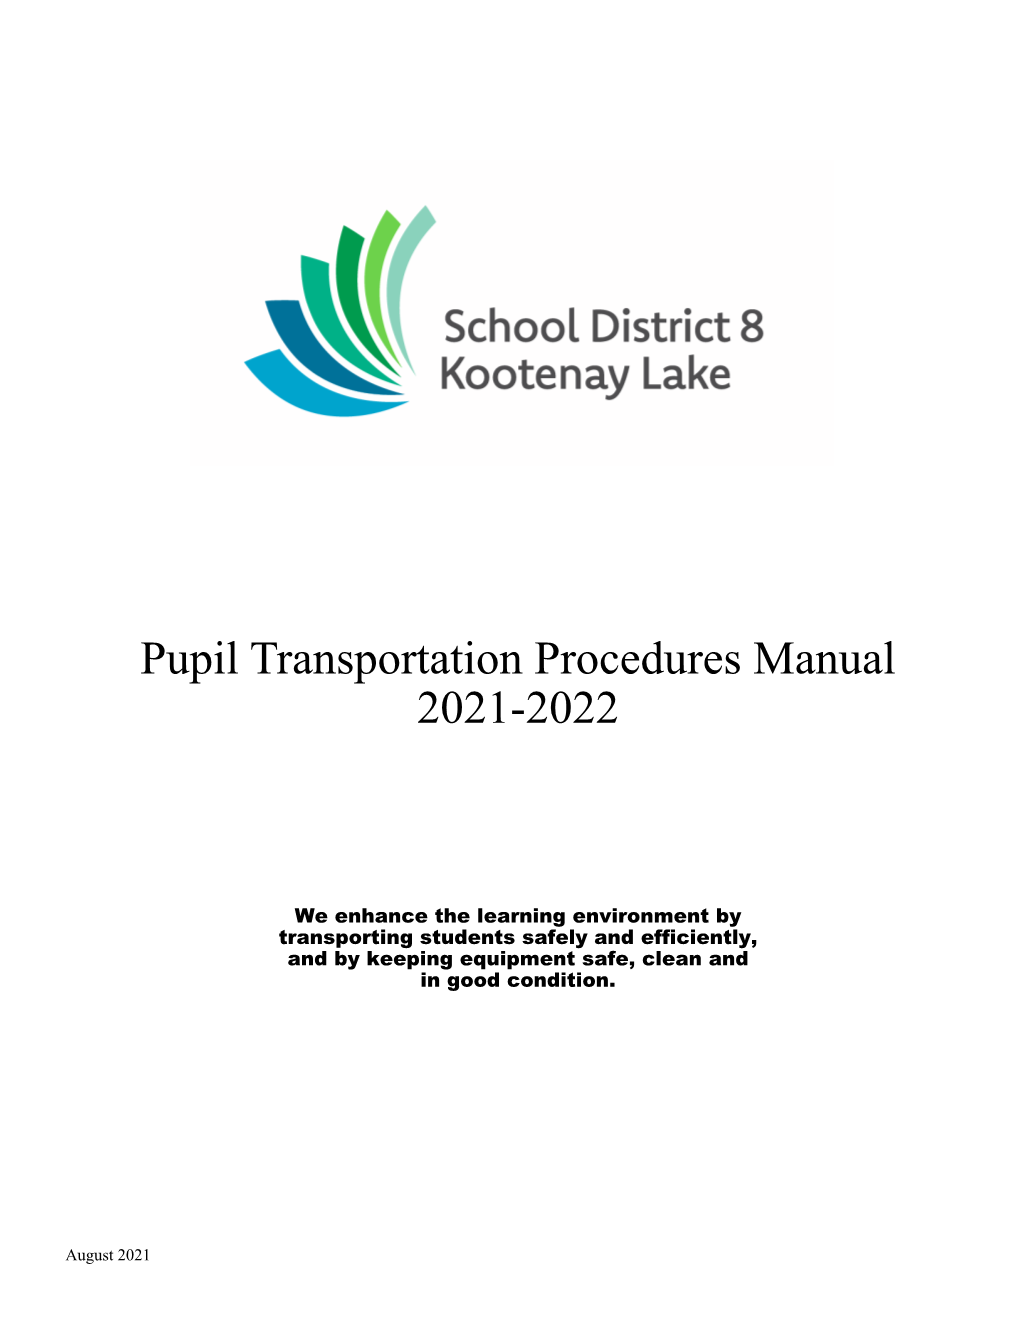 Pupil Transportation Procedures Manual 2021-2022